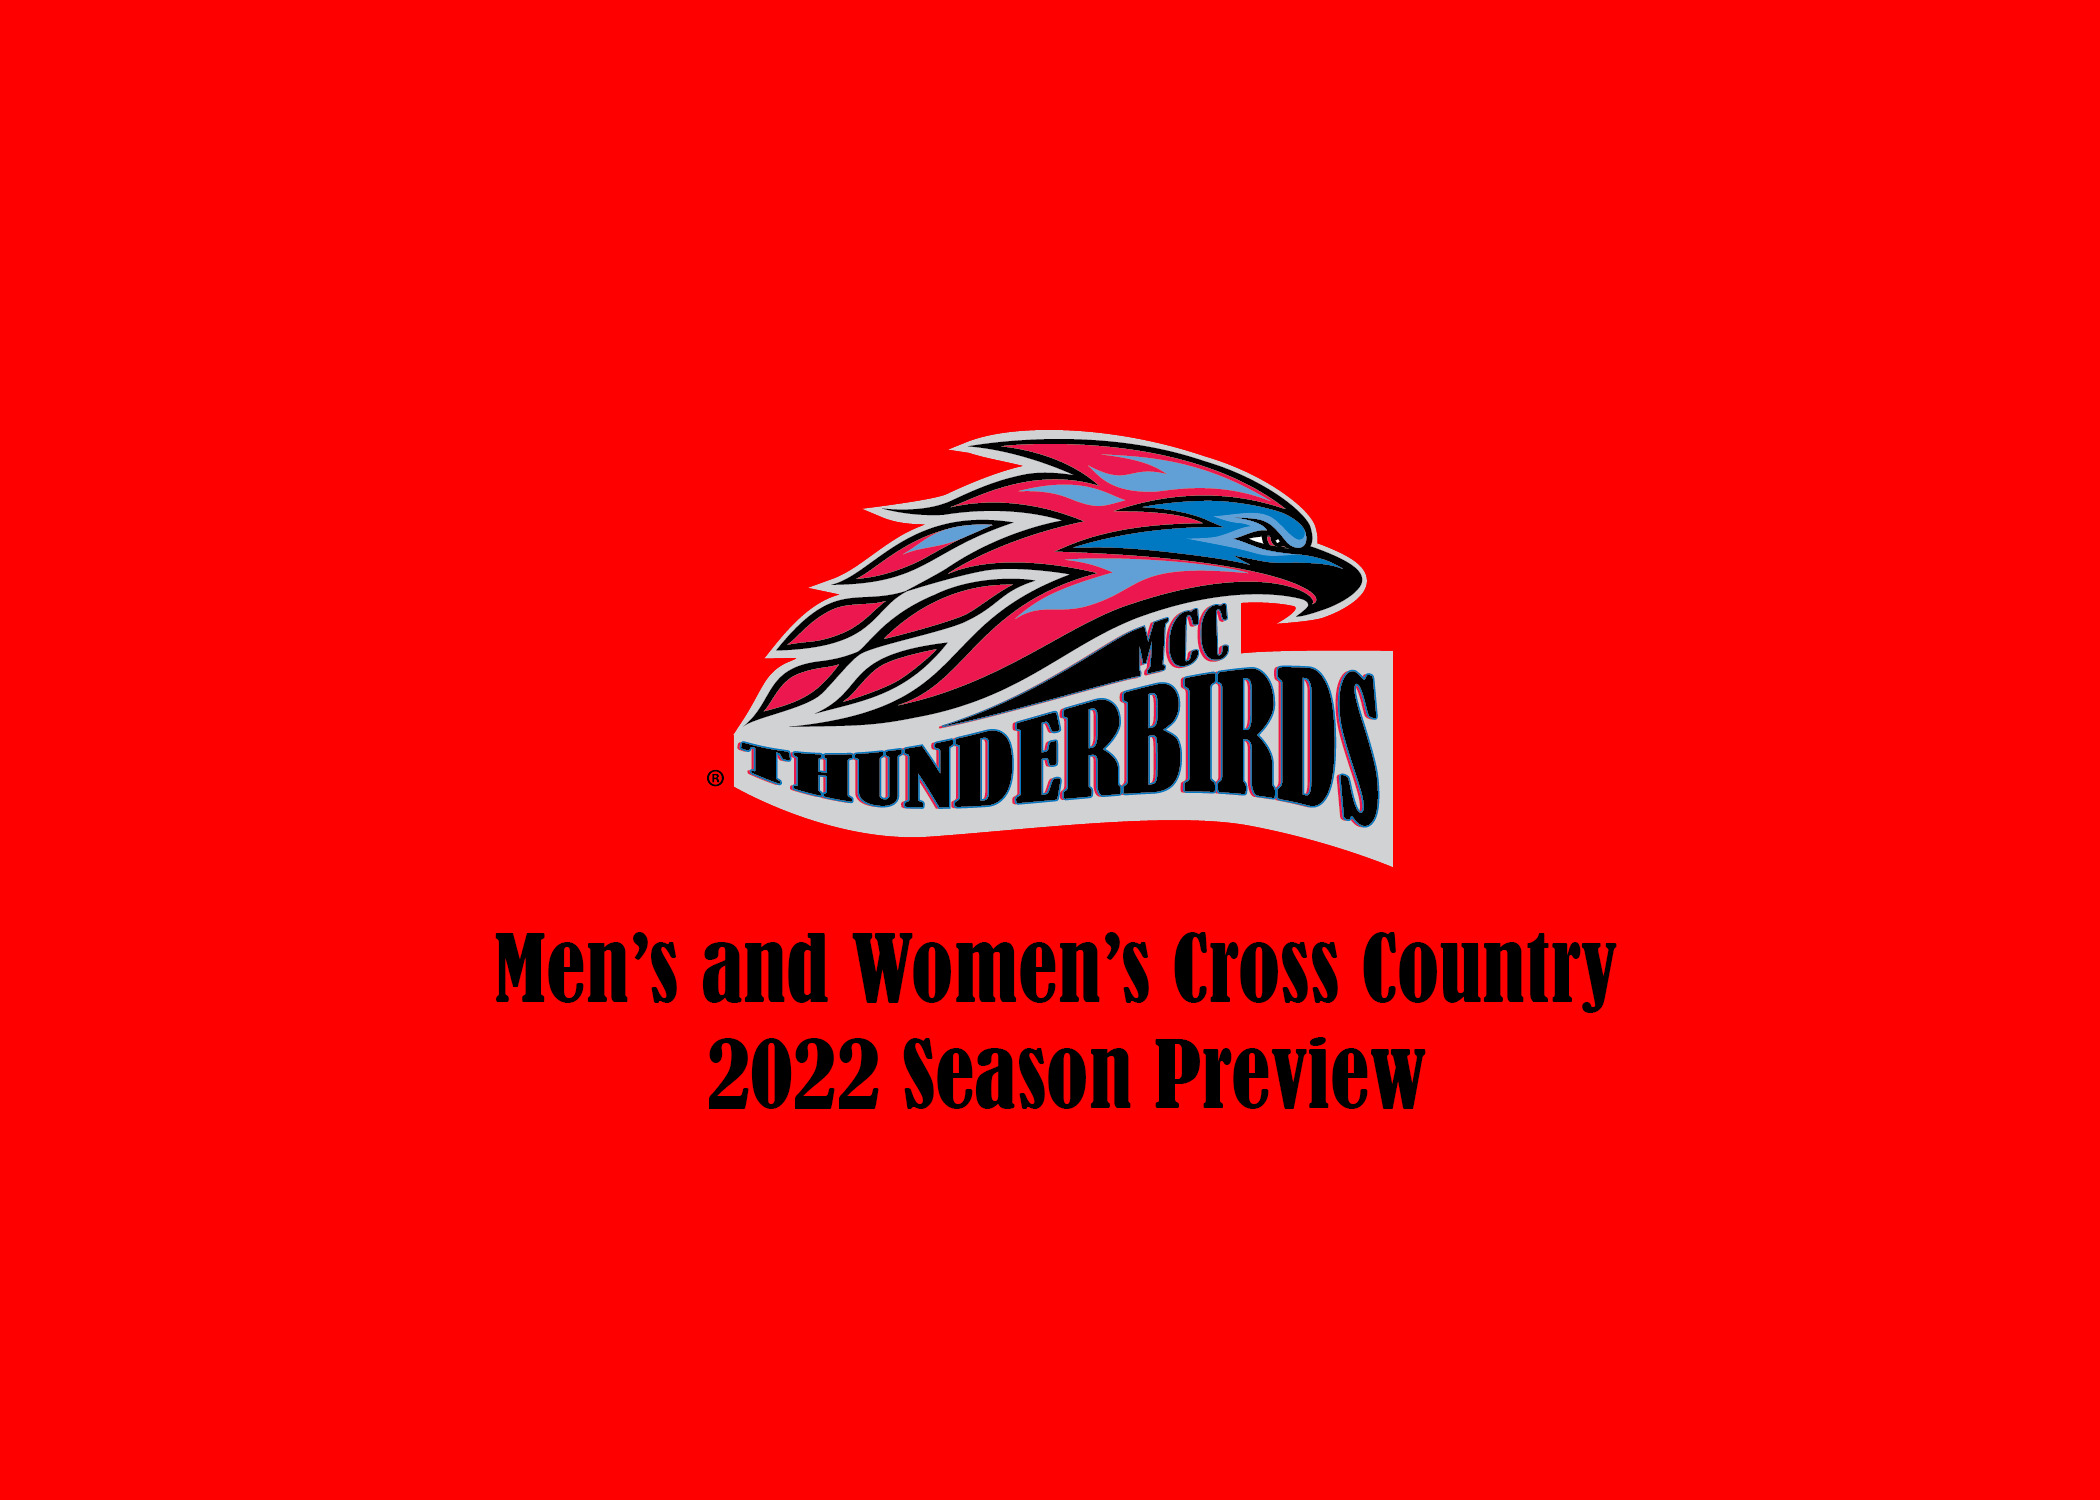 Mesa Cross Country Opens Their 2022 Season Tomorrow